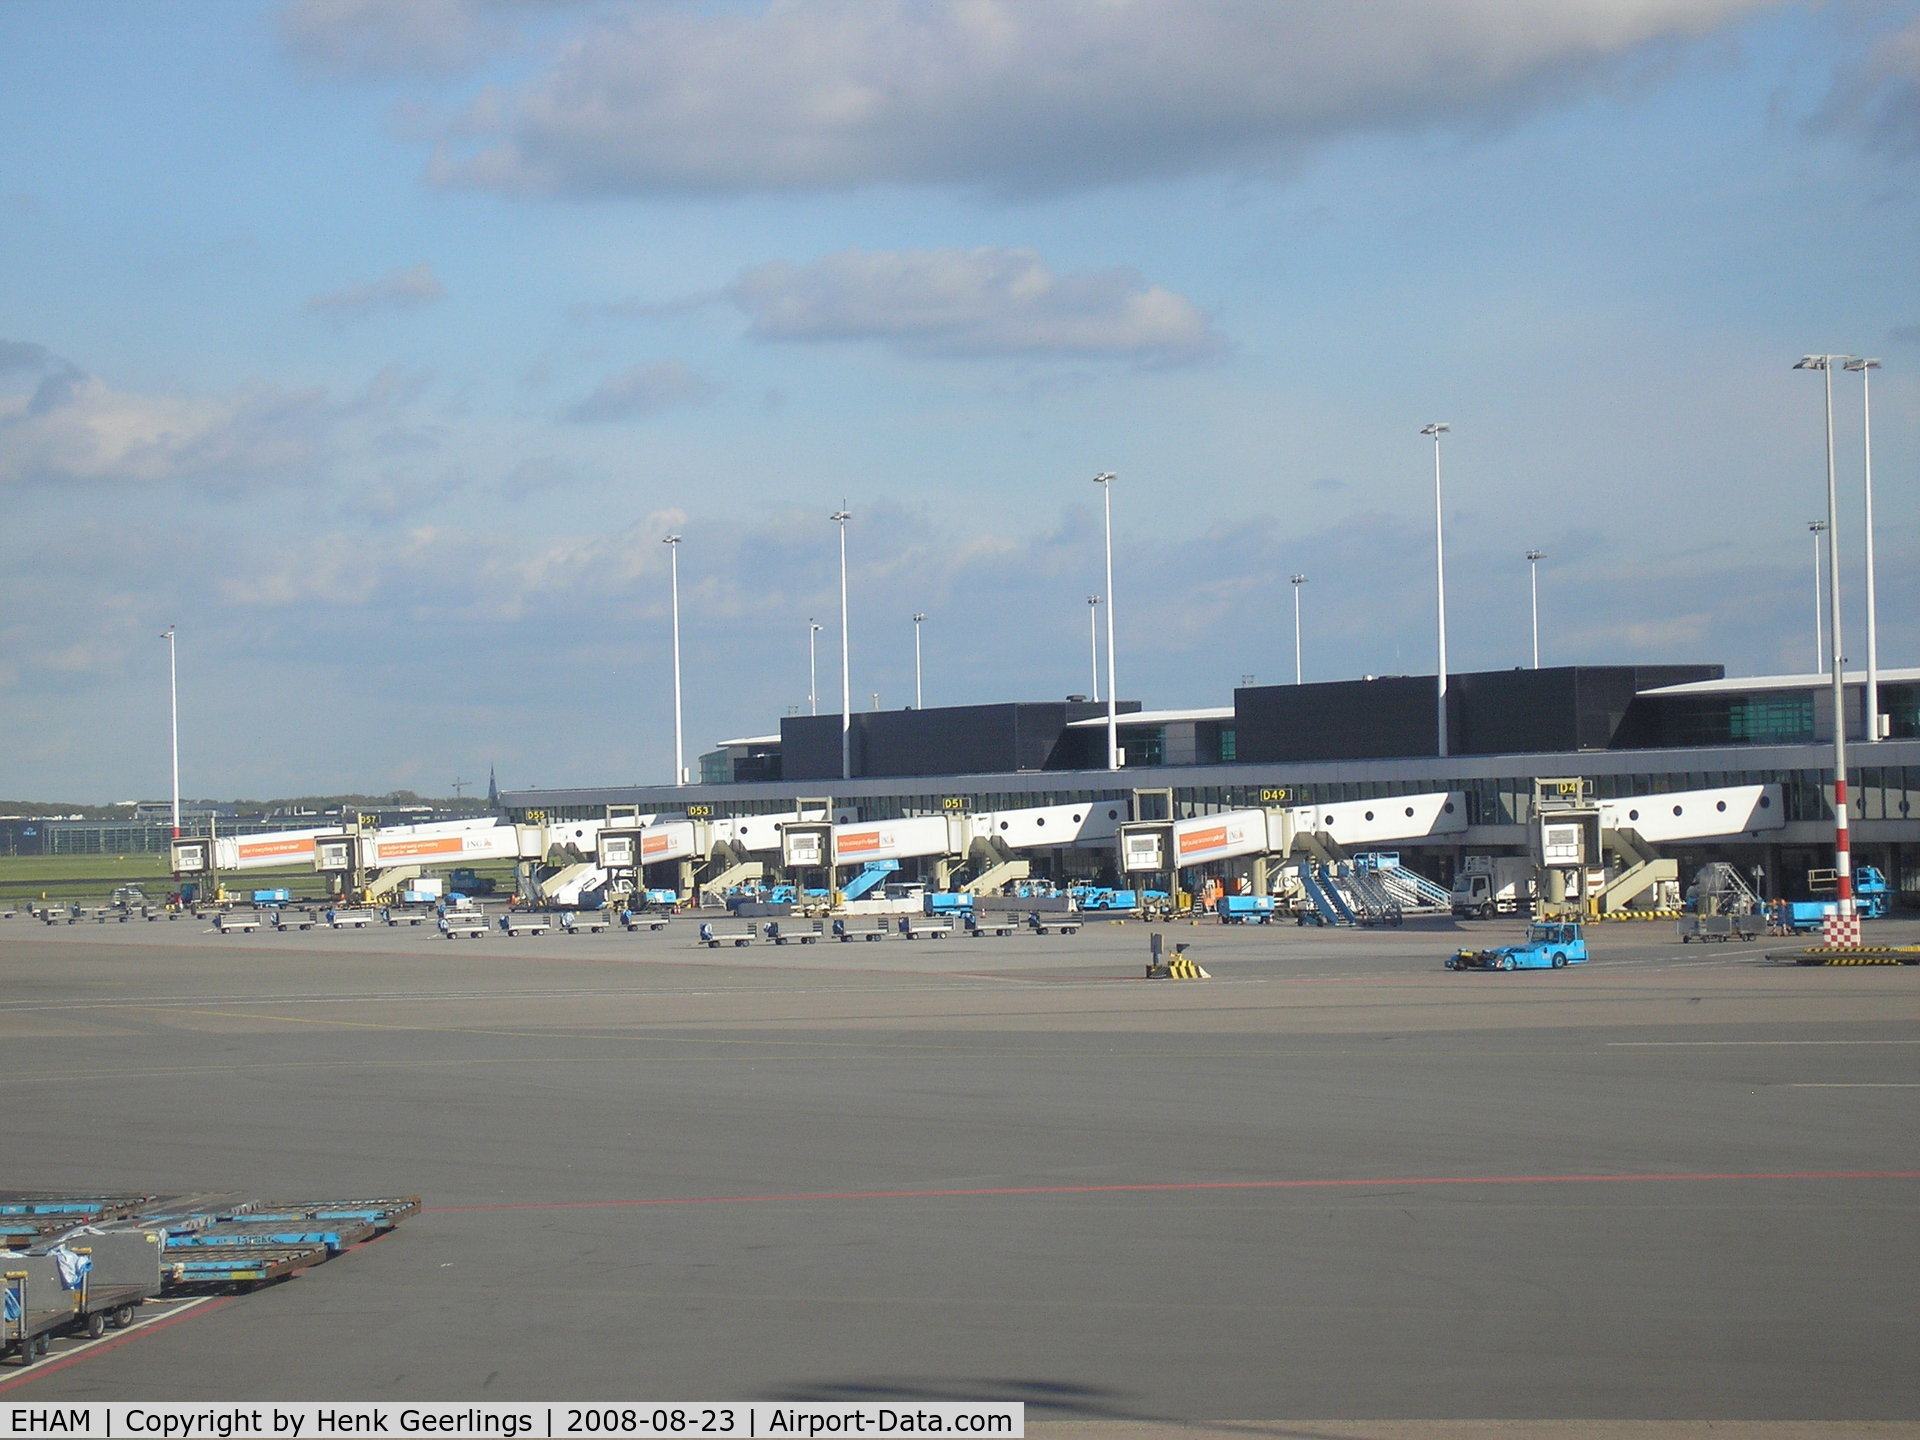 Amsterdam Schiphol Airport, Haarlemmermeer, near Amsterdam Netherlands (EHAM) - Gates at Schiphol Airport